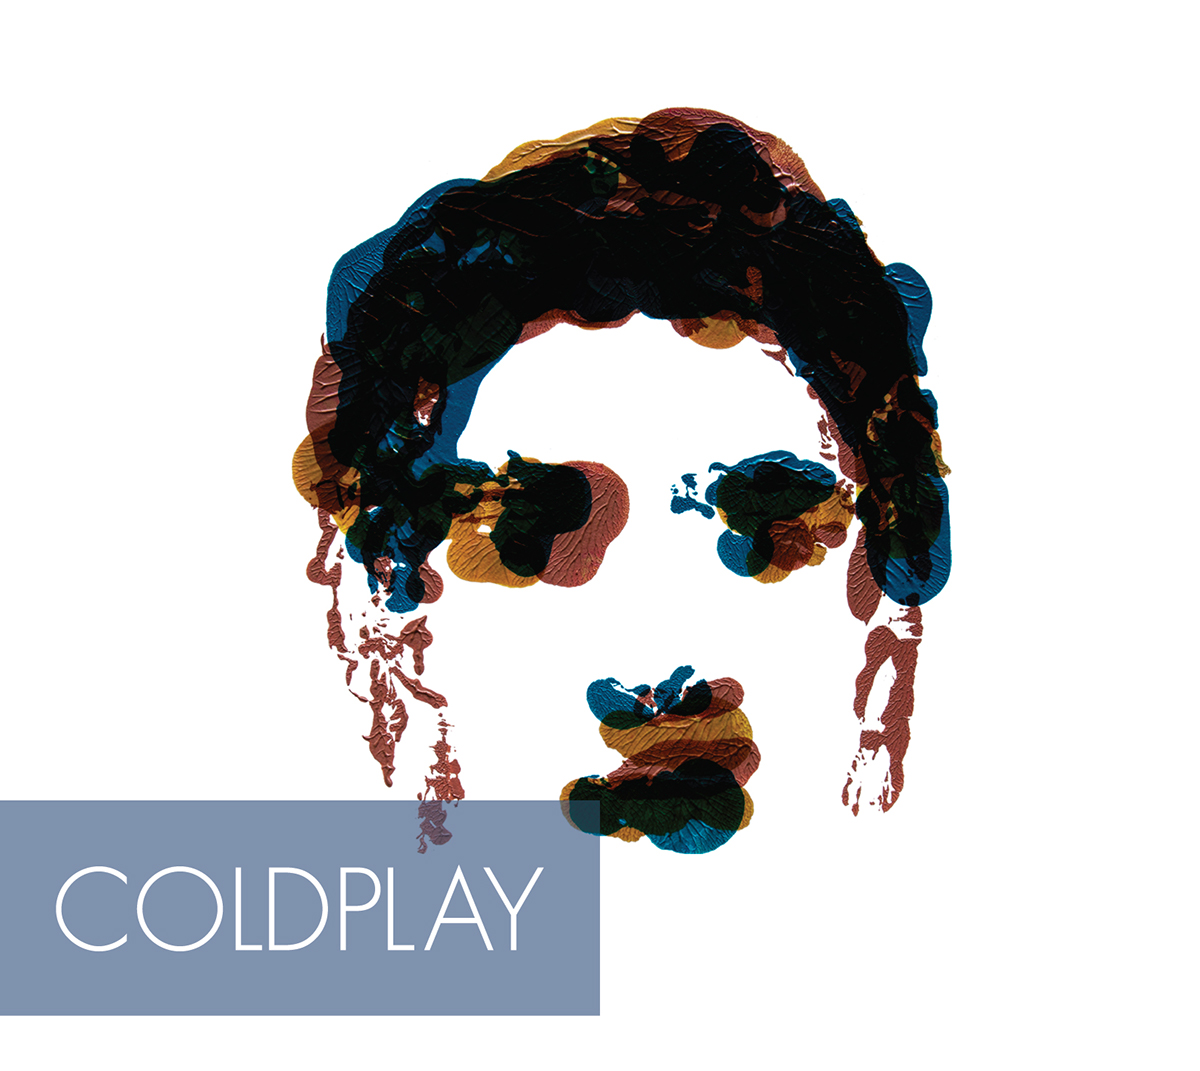 Coldplay cd illustration cd cover don't panic Square One Best of Album acrylic paint edited painting Album design booklet design Lyrics